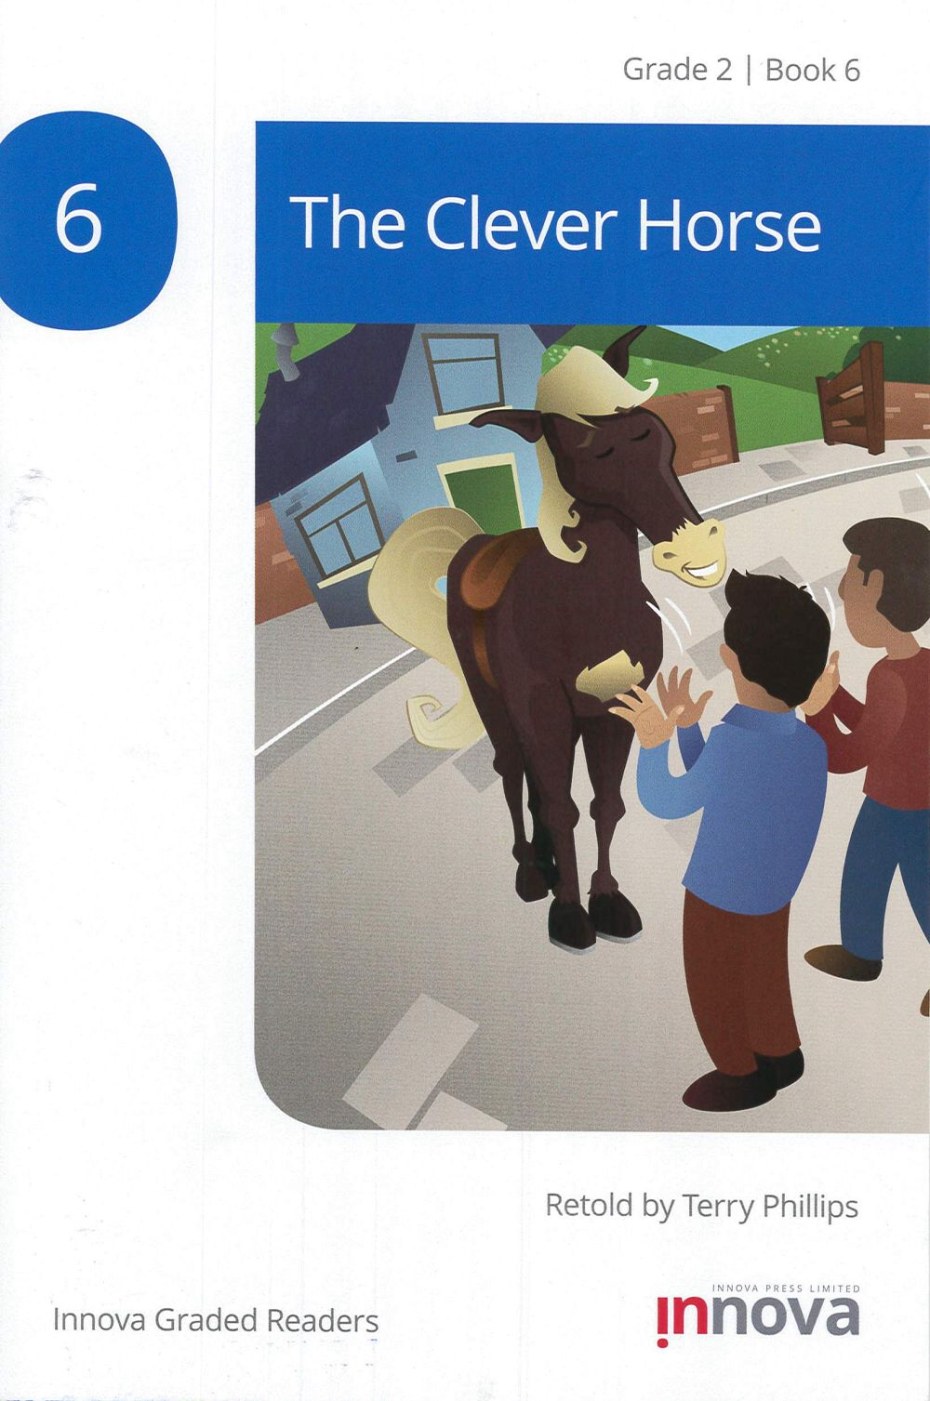 Innova Graded Readers Grade 2 (Book 6): The Clever Horse